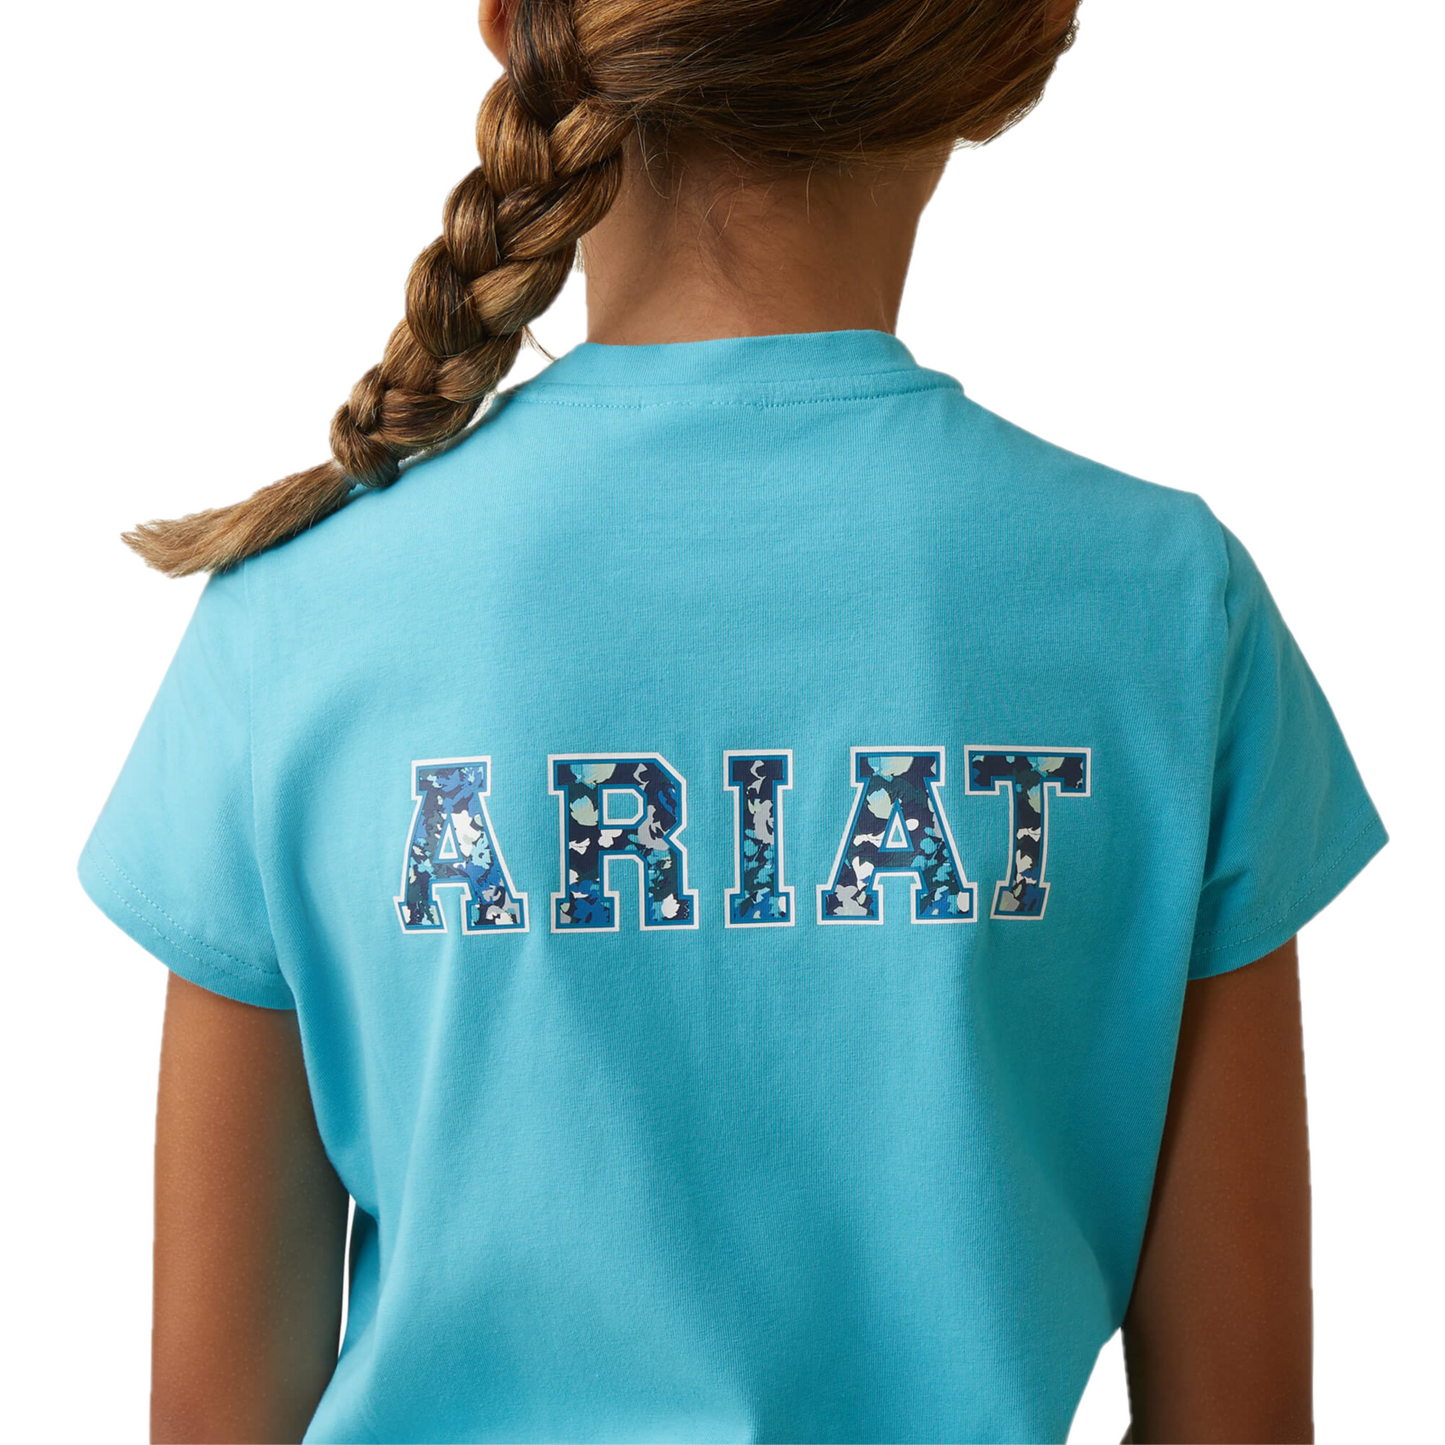 Ariat® Girls Varsity Camo Maui Blue T-Shirt 10043735